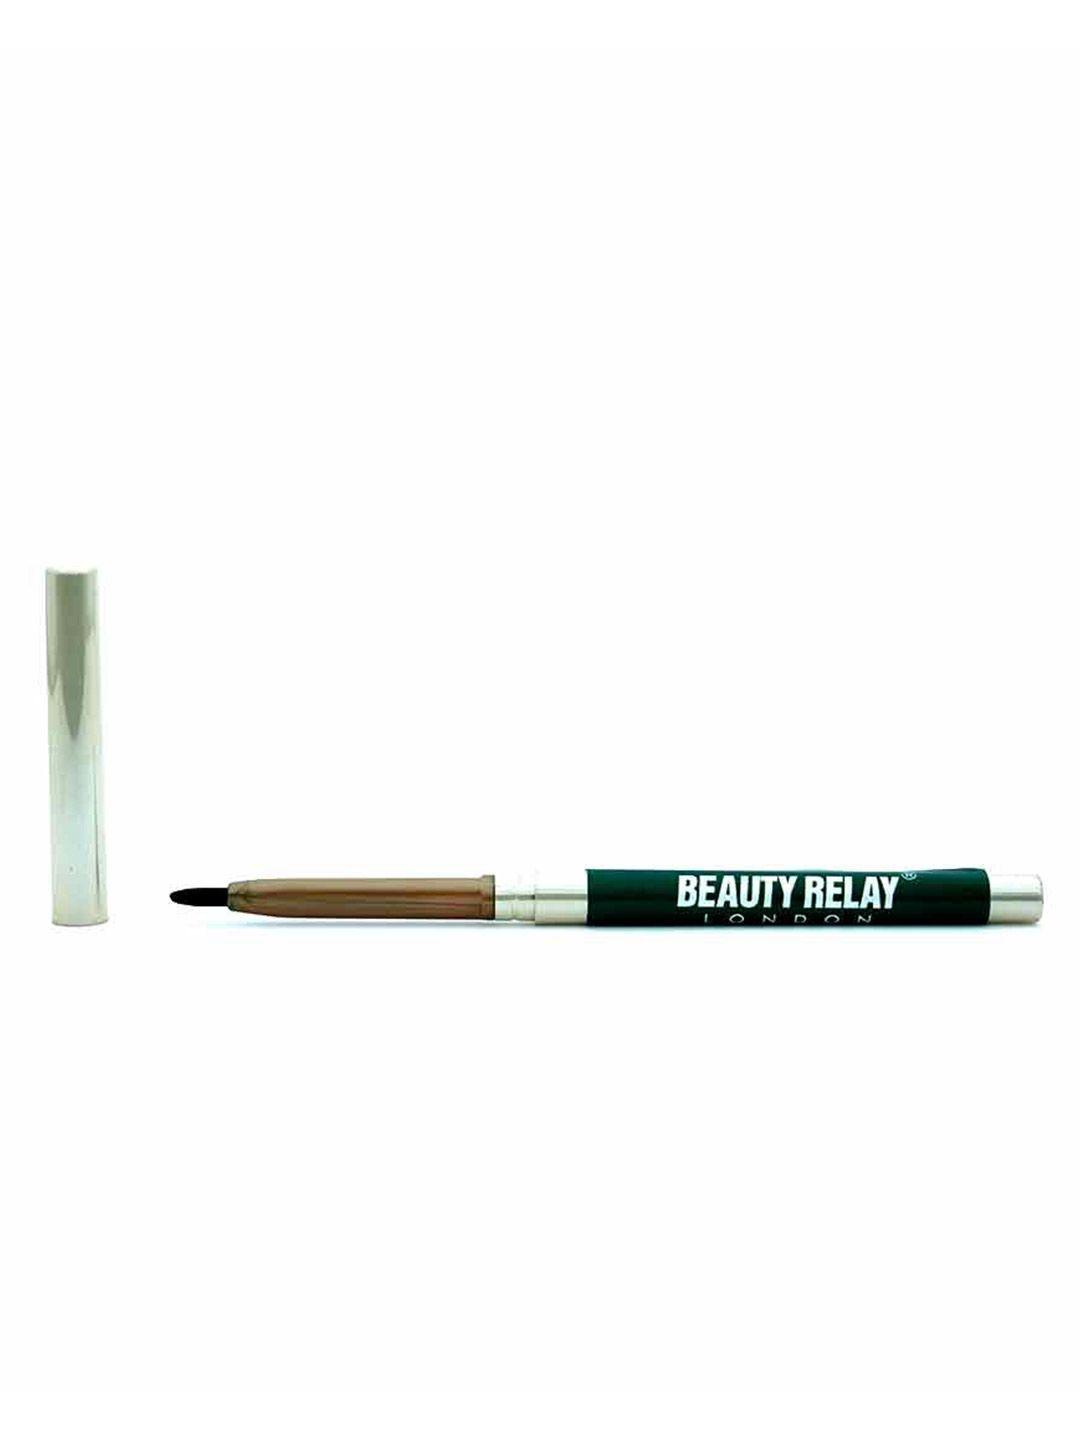 beautyrelay london be bold eye kohl kajal pencil 0.27g - midnight black